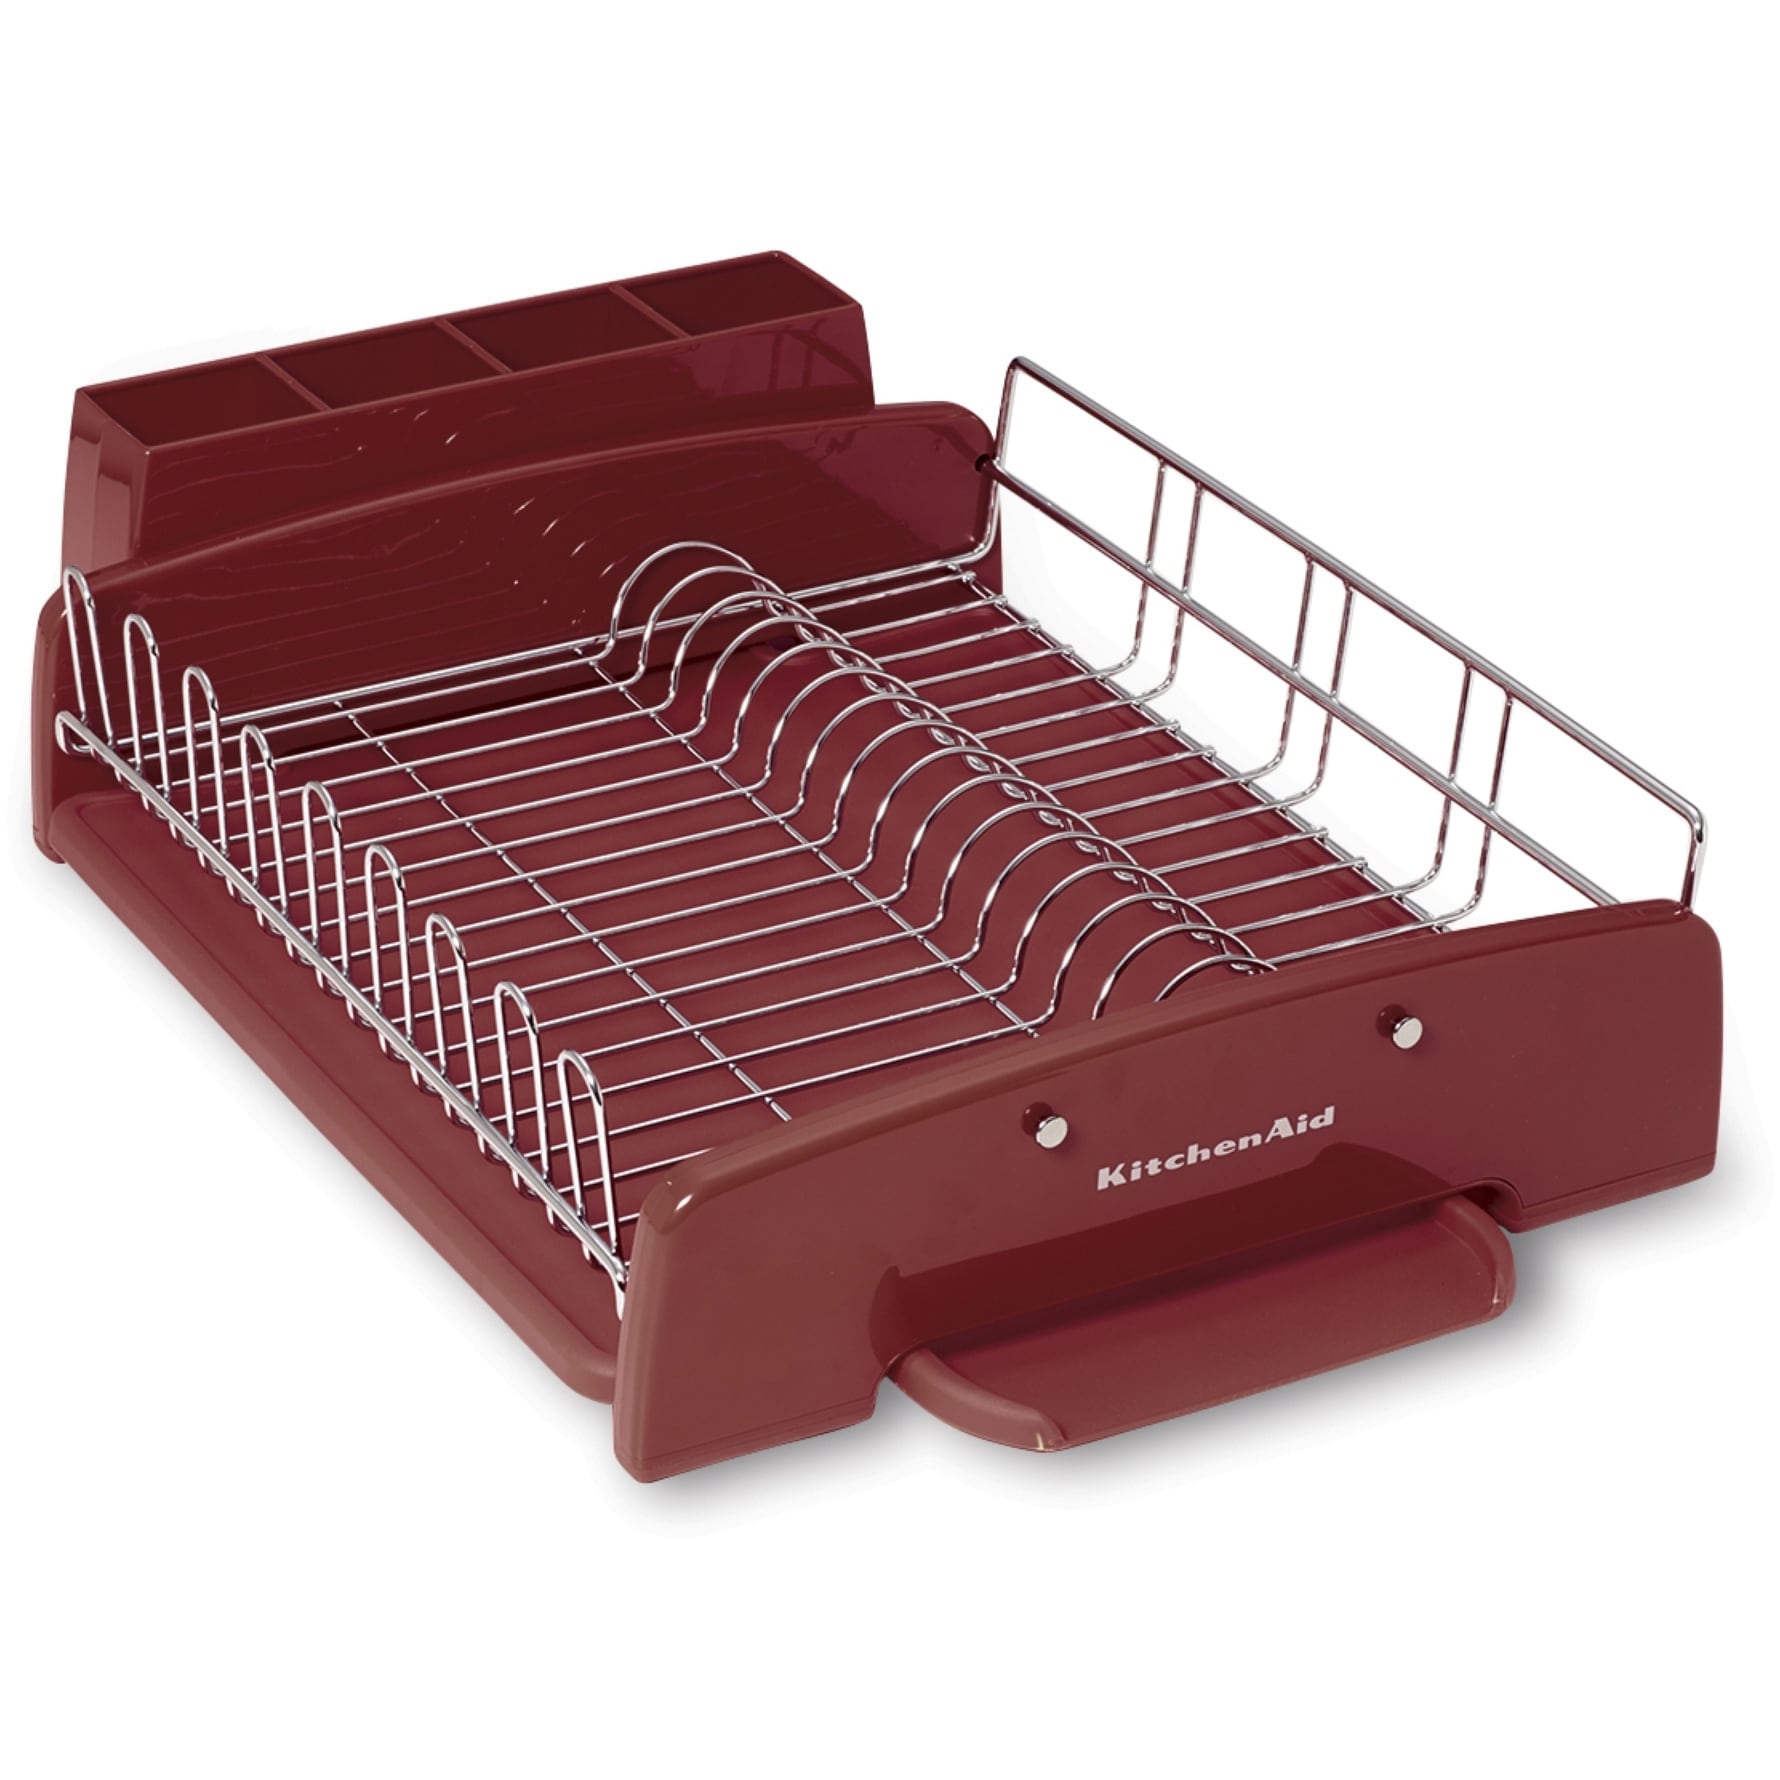 KitchenAid Classic 3-piece Red Dish Rack - Bed Bath & Beyond